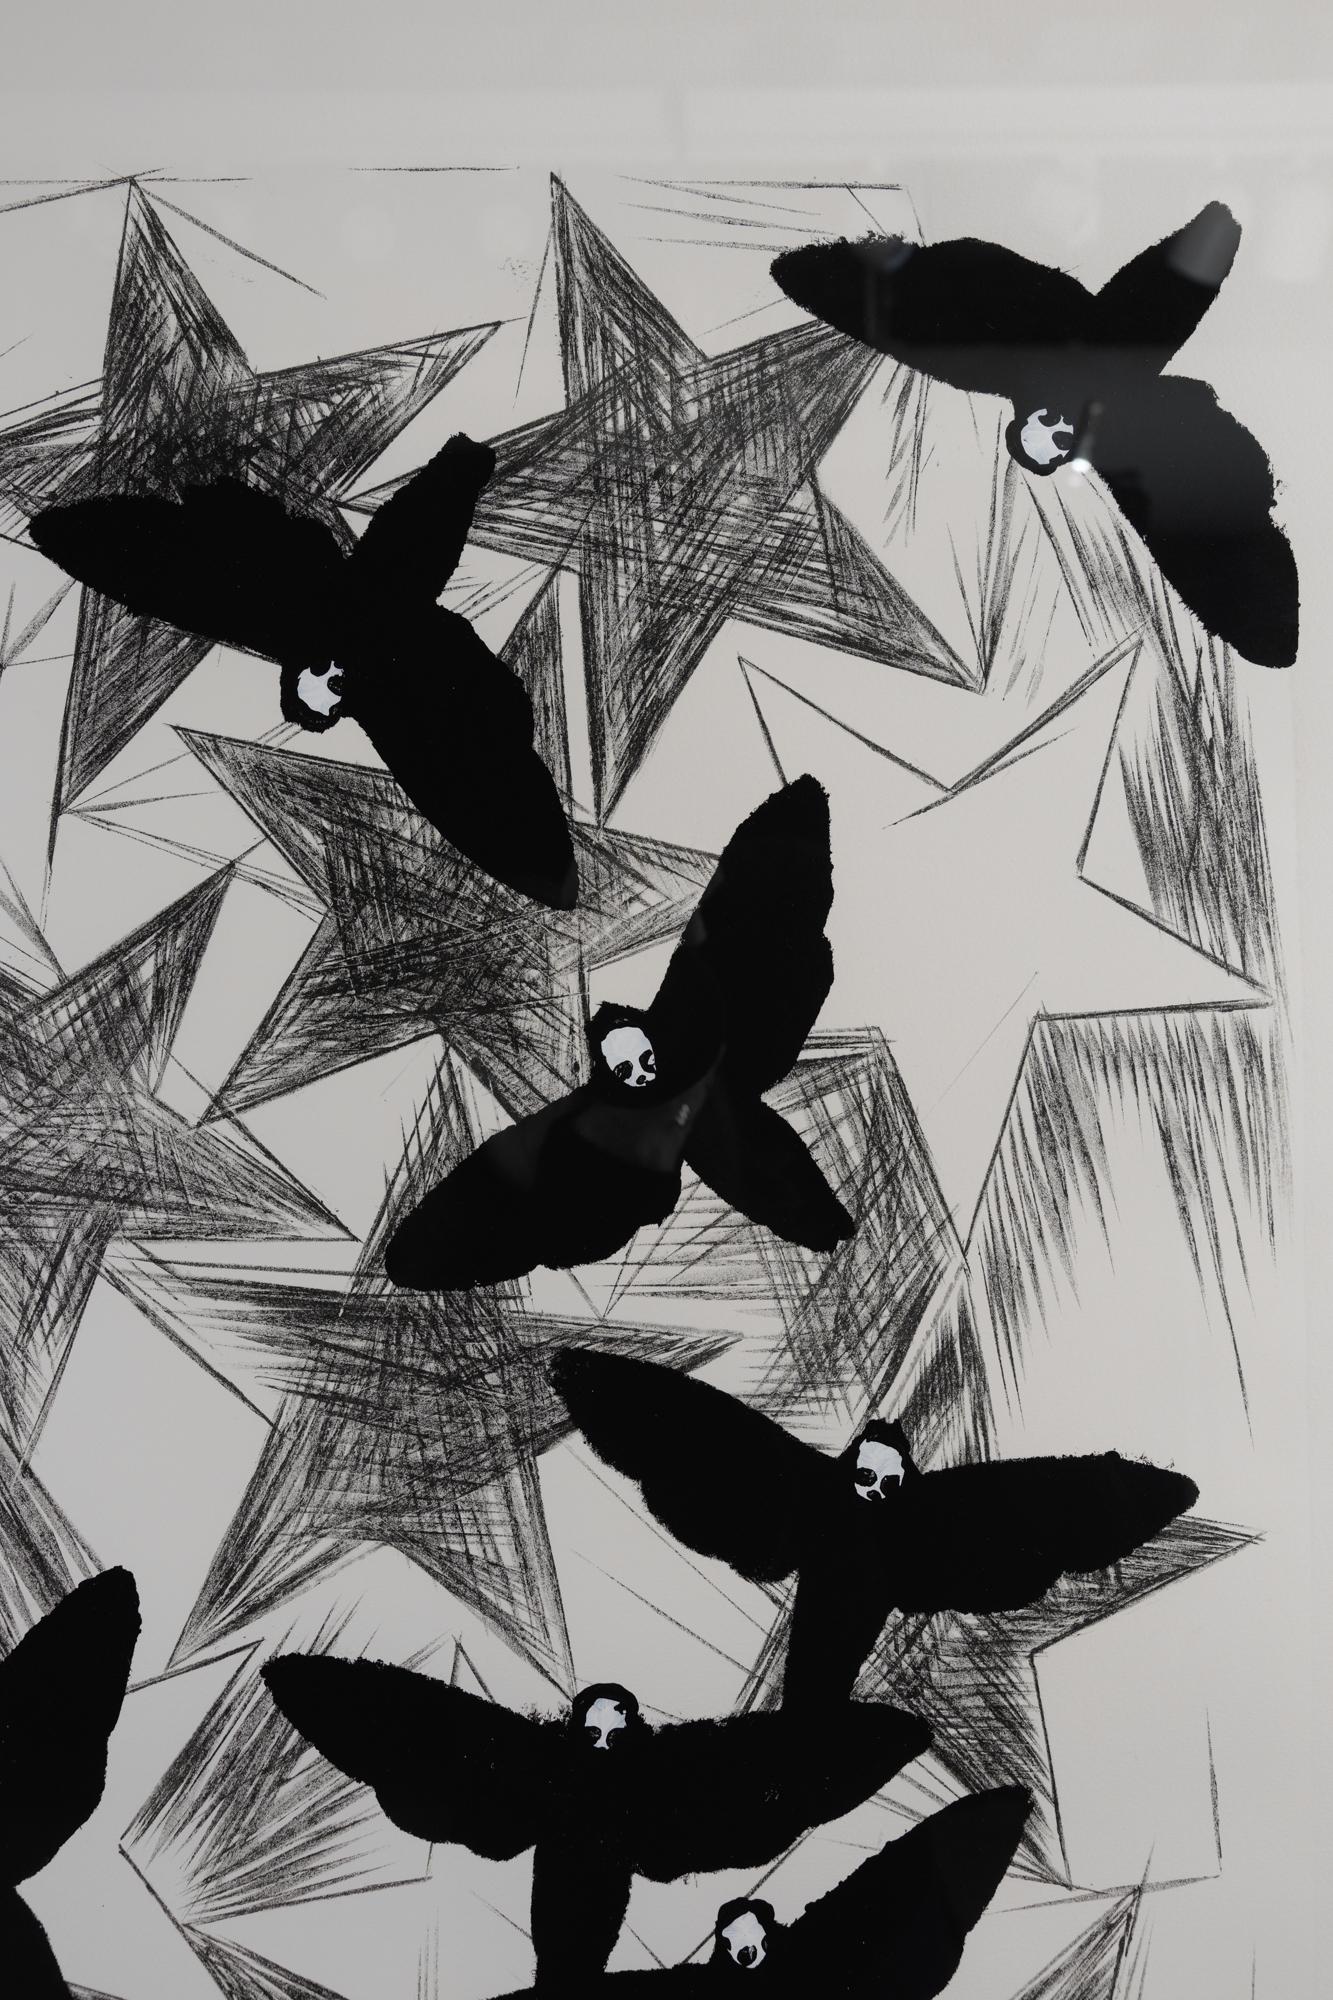 Charline von Heyl
Hawk Moths, 2016
Lithograph with pochoi
47 1/4 x 31 1/2 inches  (120 x 80 cm)
Edition 8/30